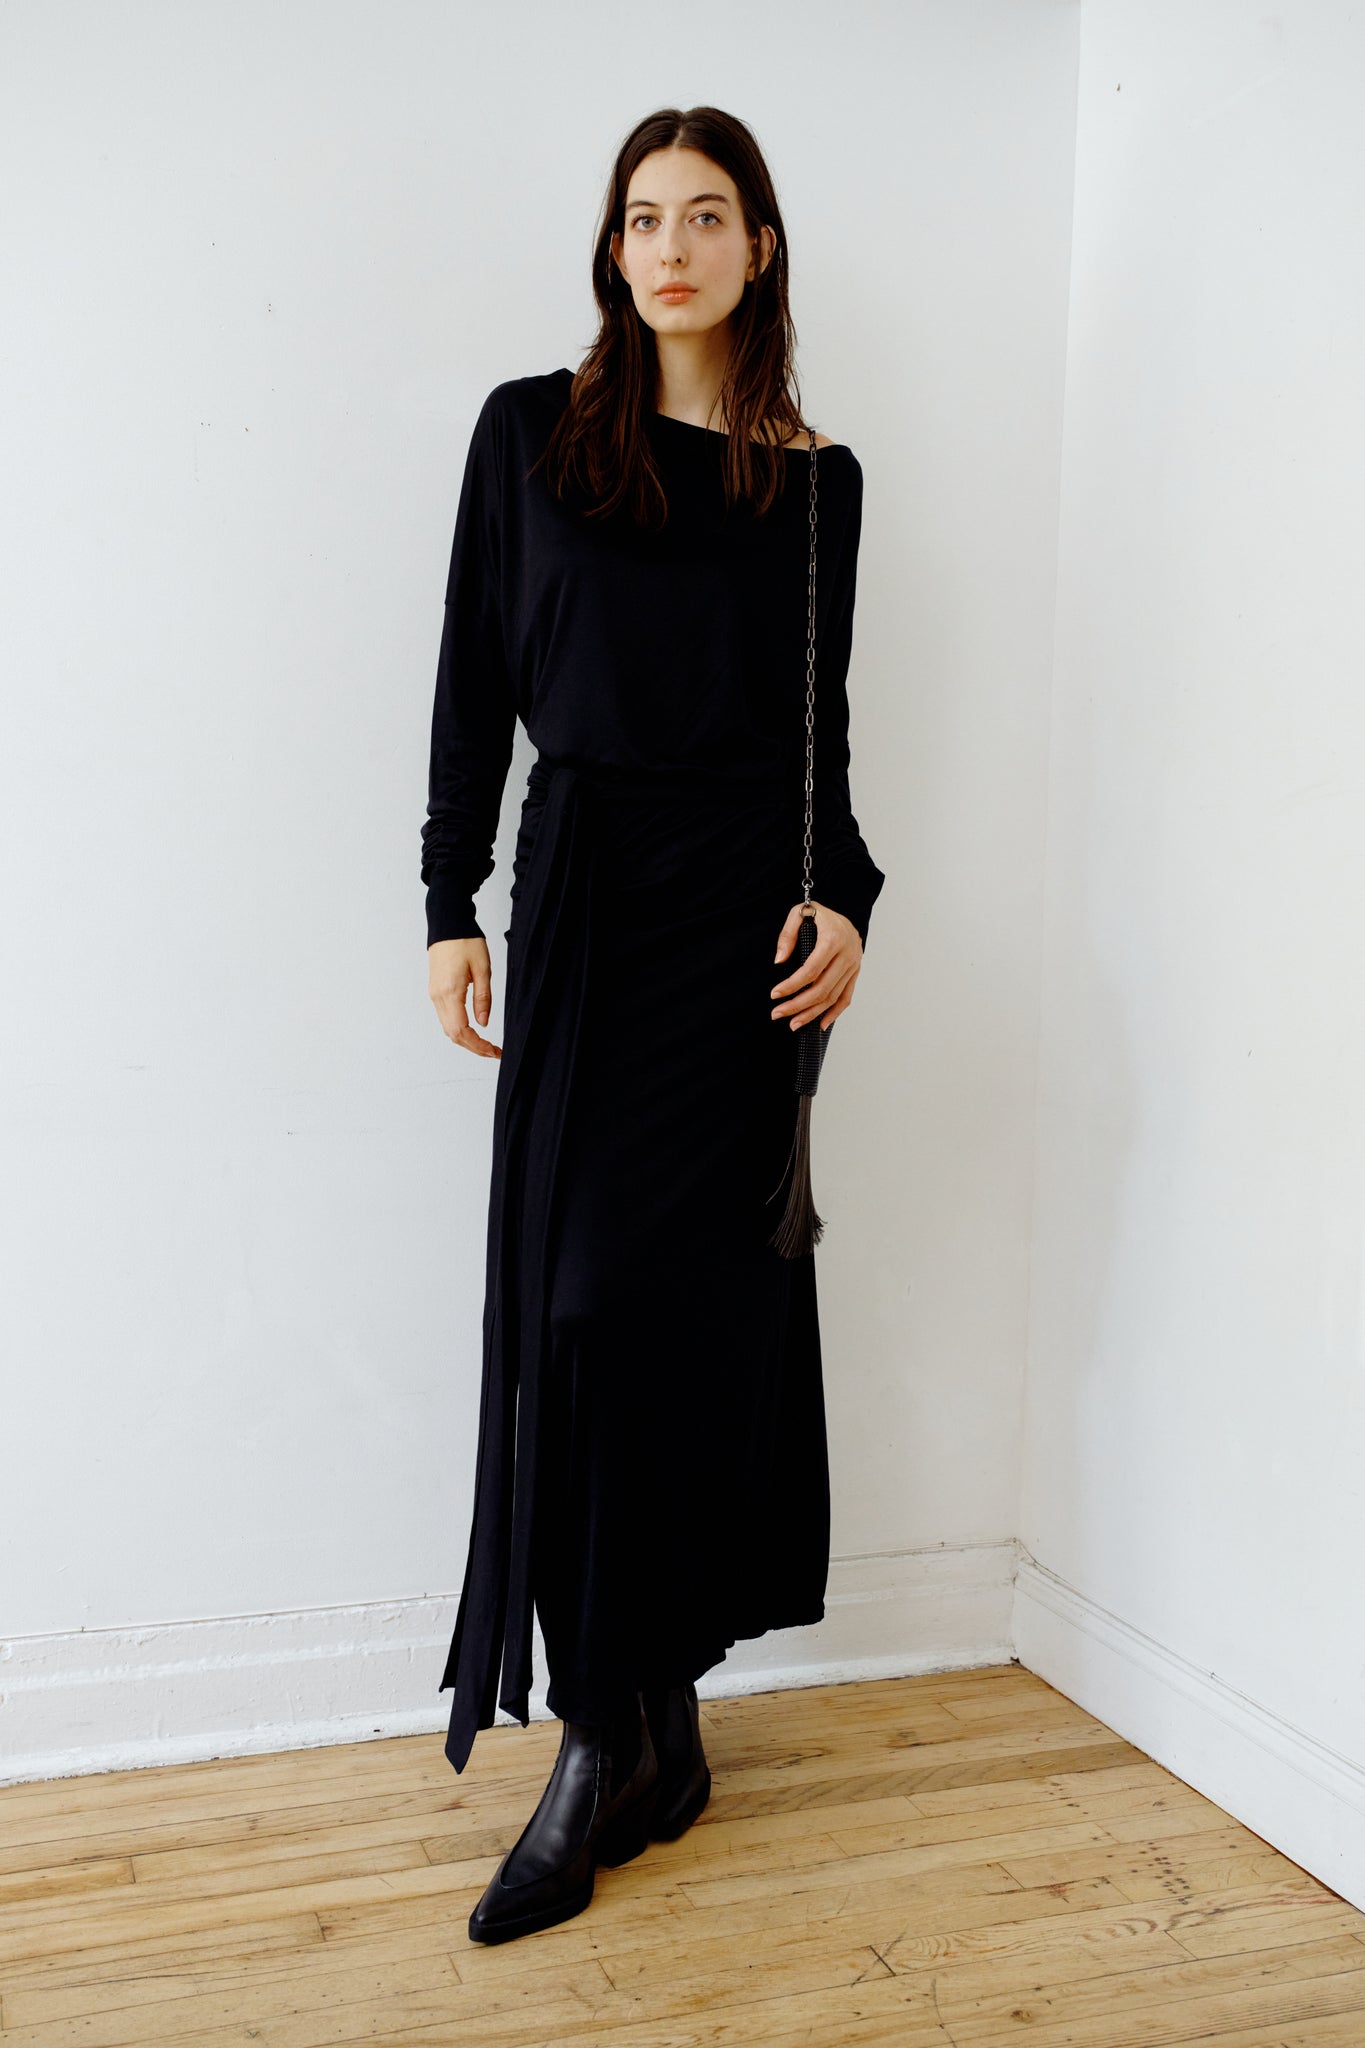 Yves Saint Laurent Silk Boatneck Maxi Dress